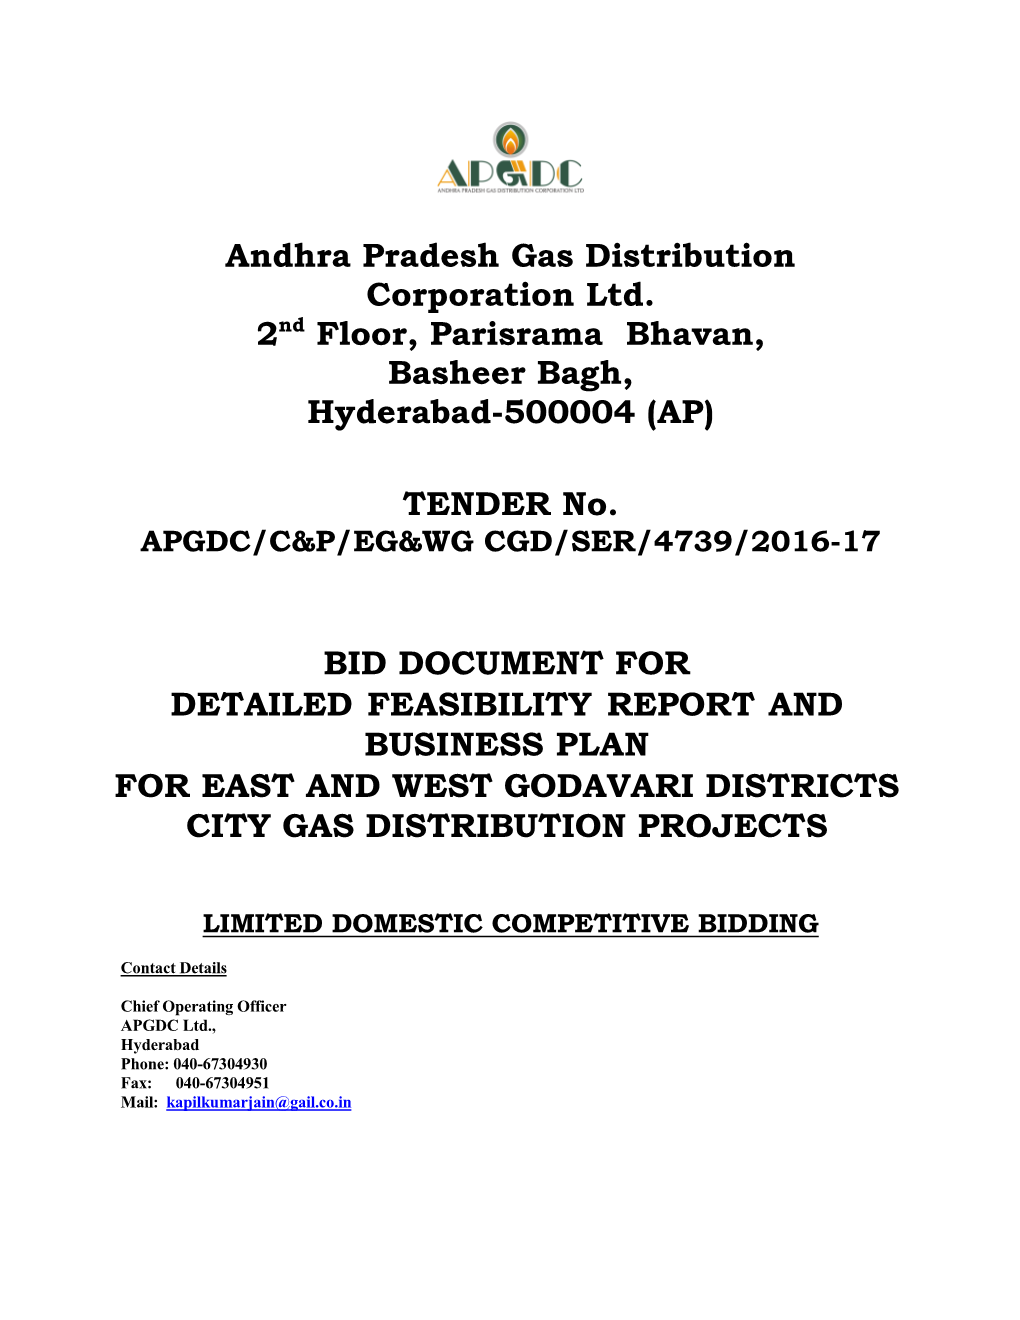 Andhra Pradesh Gas Distribution Corporation Ltd. 2Nd Floor, Parisrama Bhavan, Basheer Bagh, Hyderabad-500004 (AP)